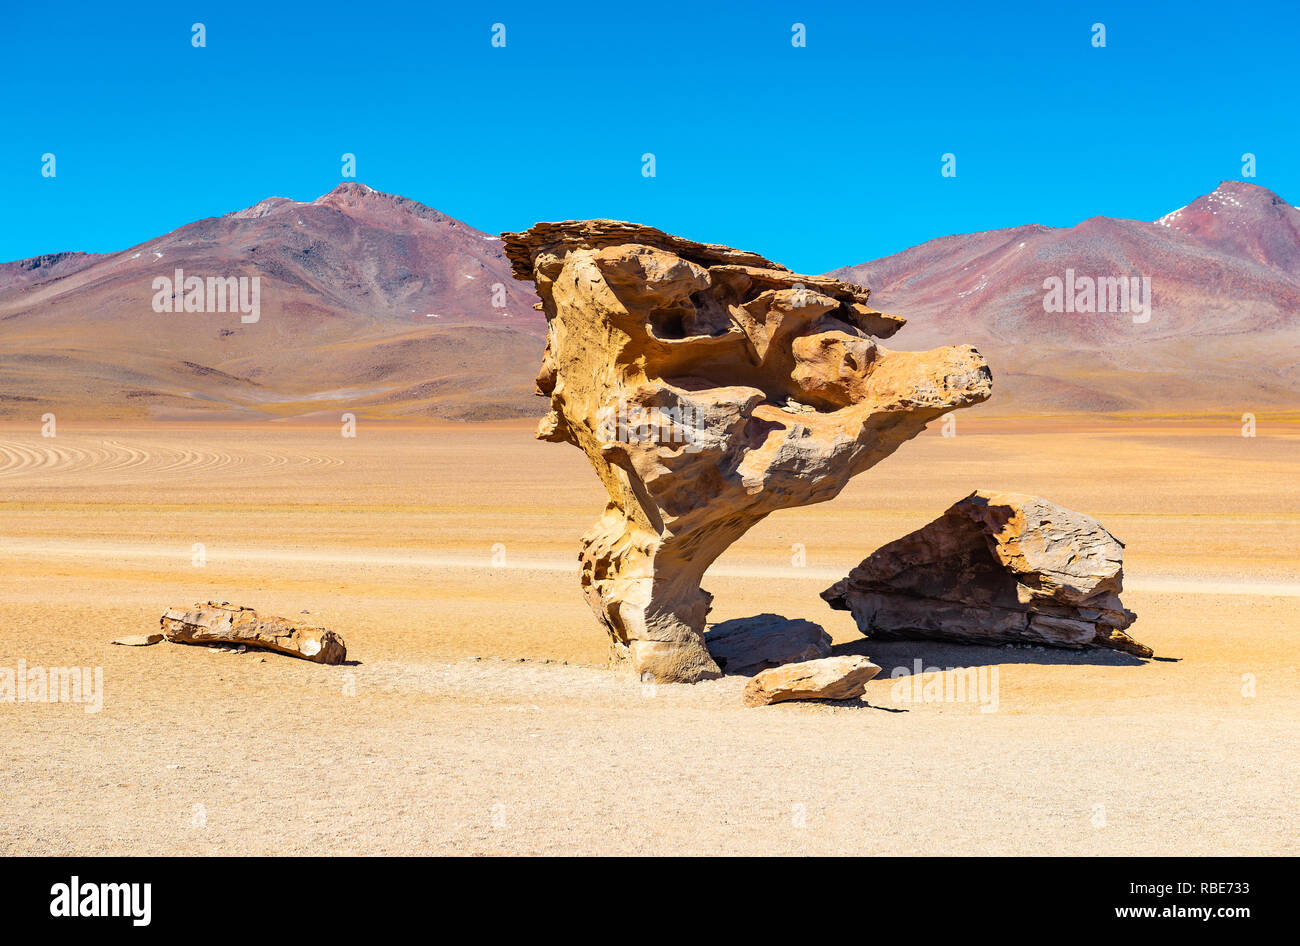 Arbol de Piedra or Stone tree in the Siloli desert, Uyuni salt flat desert, Bolivia. Stock Photo